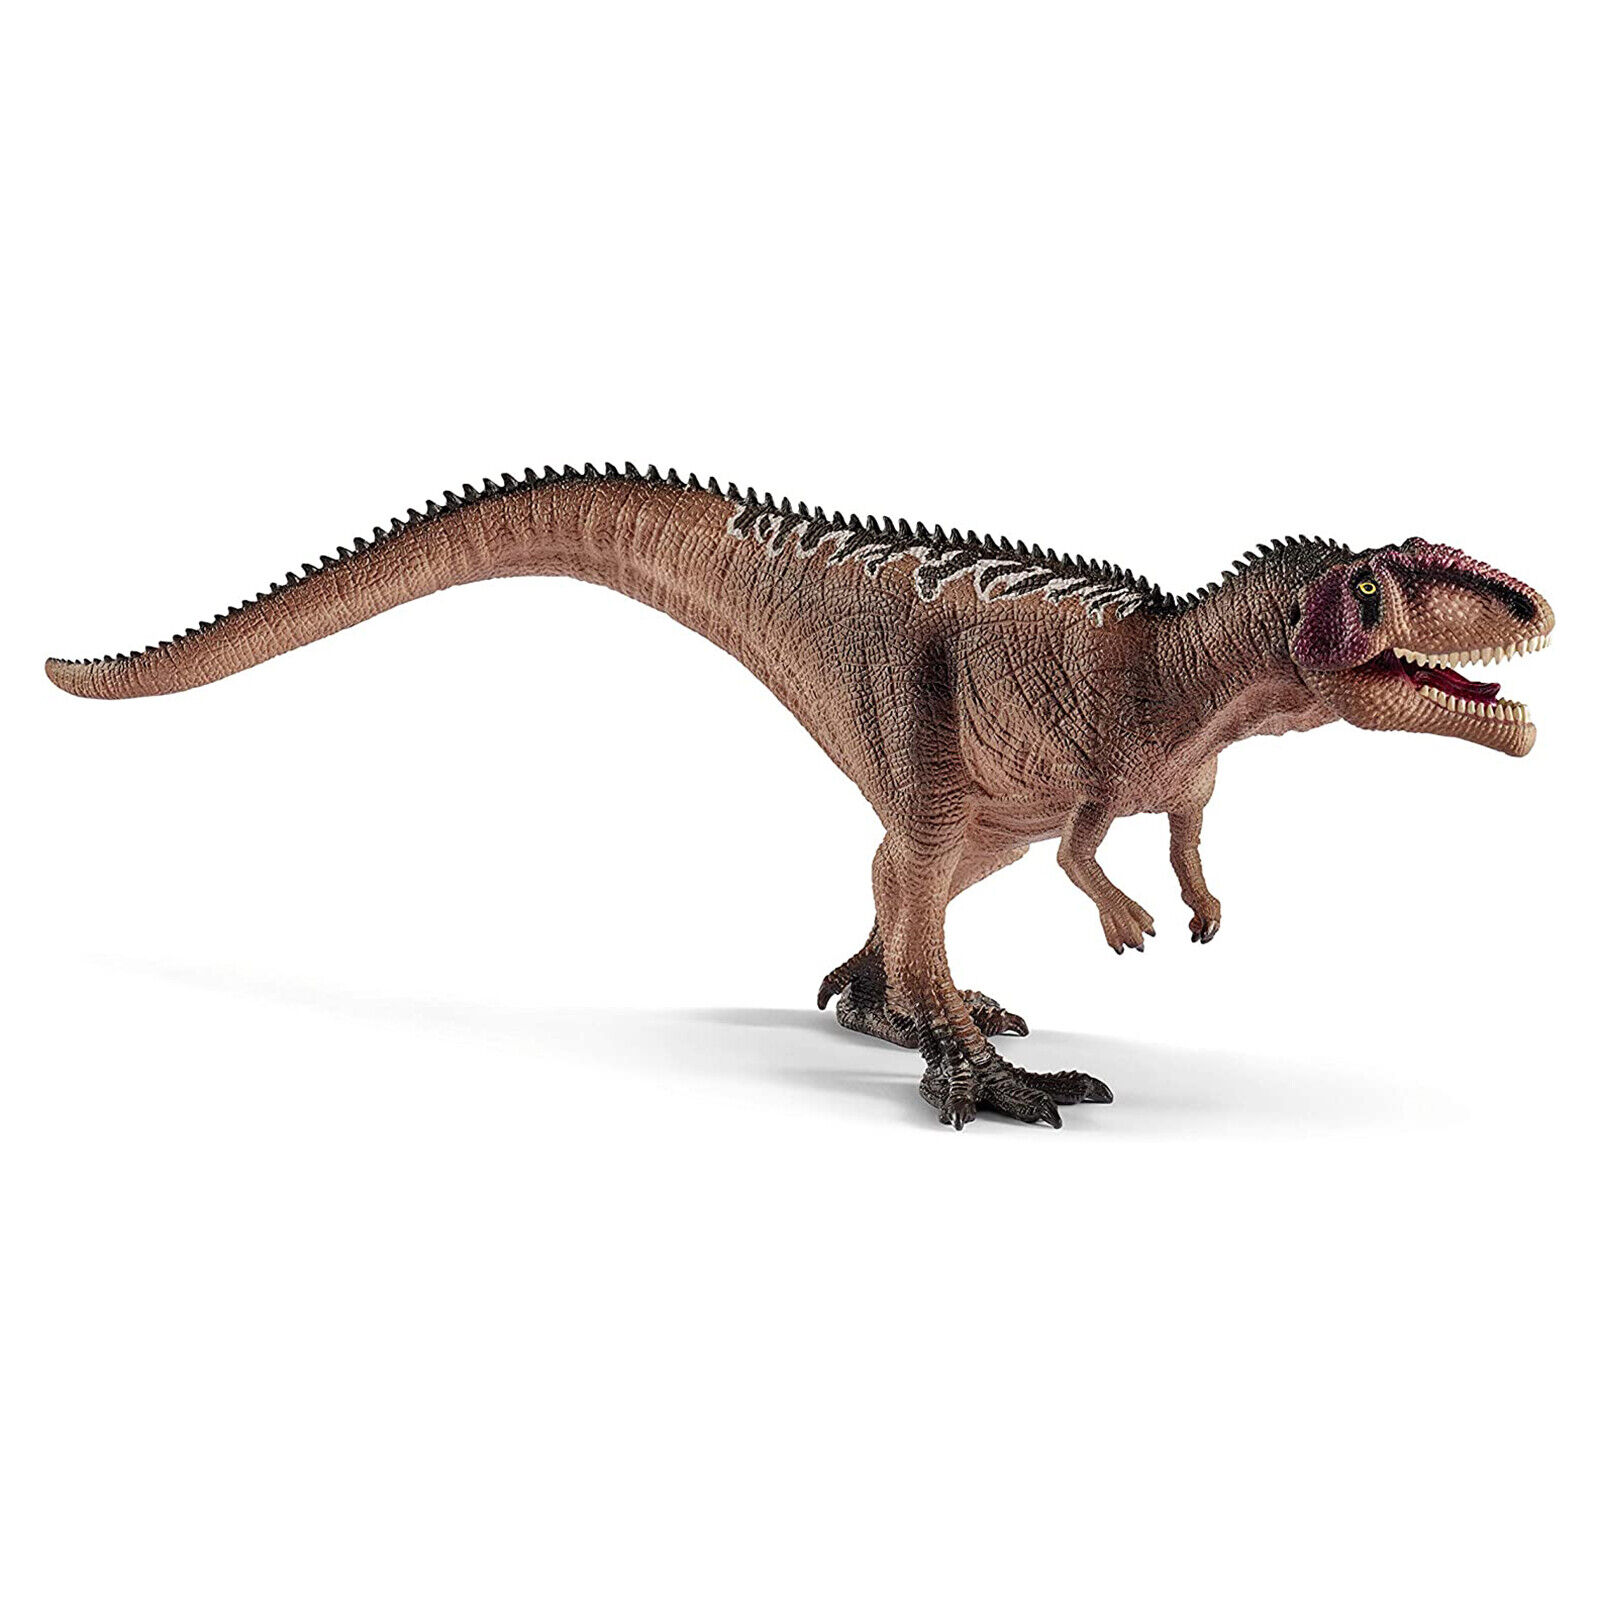 Schleich Giganotosaurus Juvenile Dinosaur Figure 15017 New In Stock